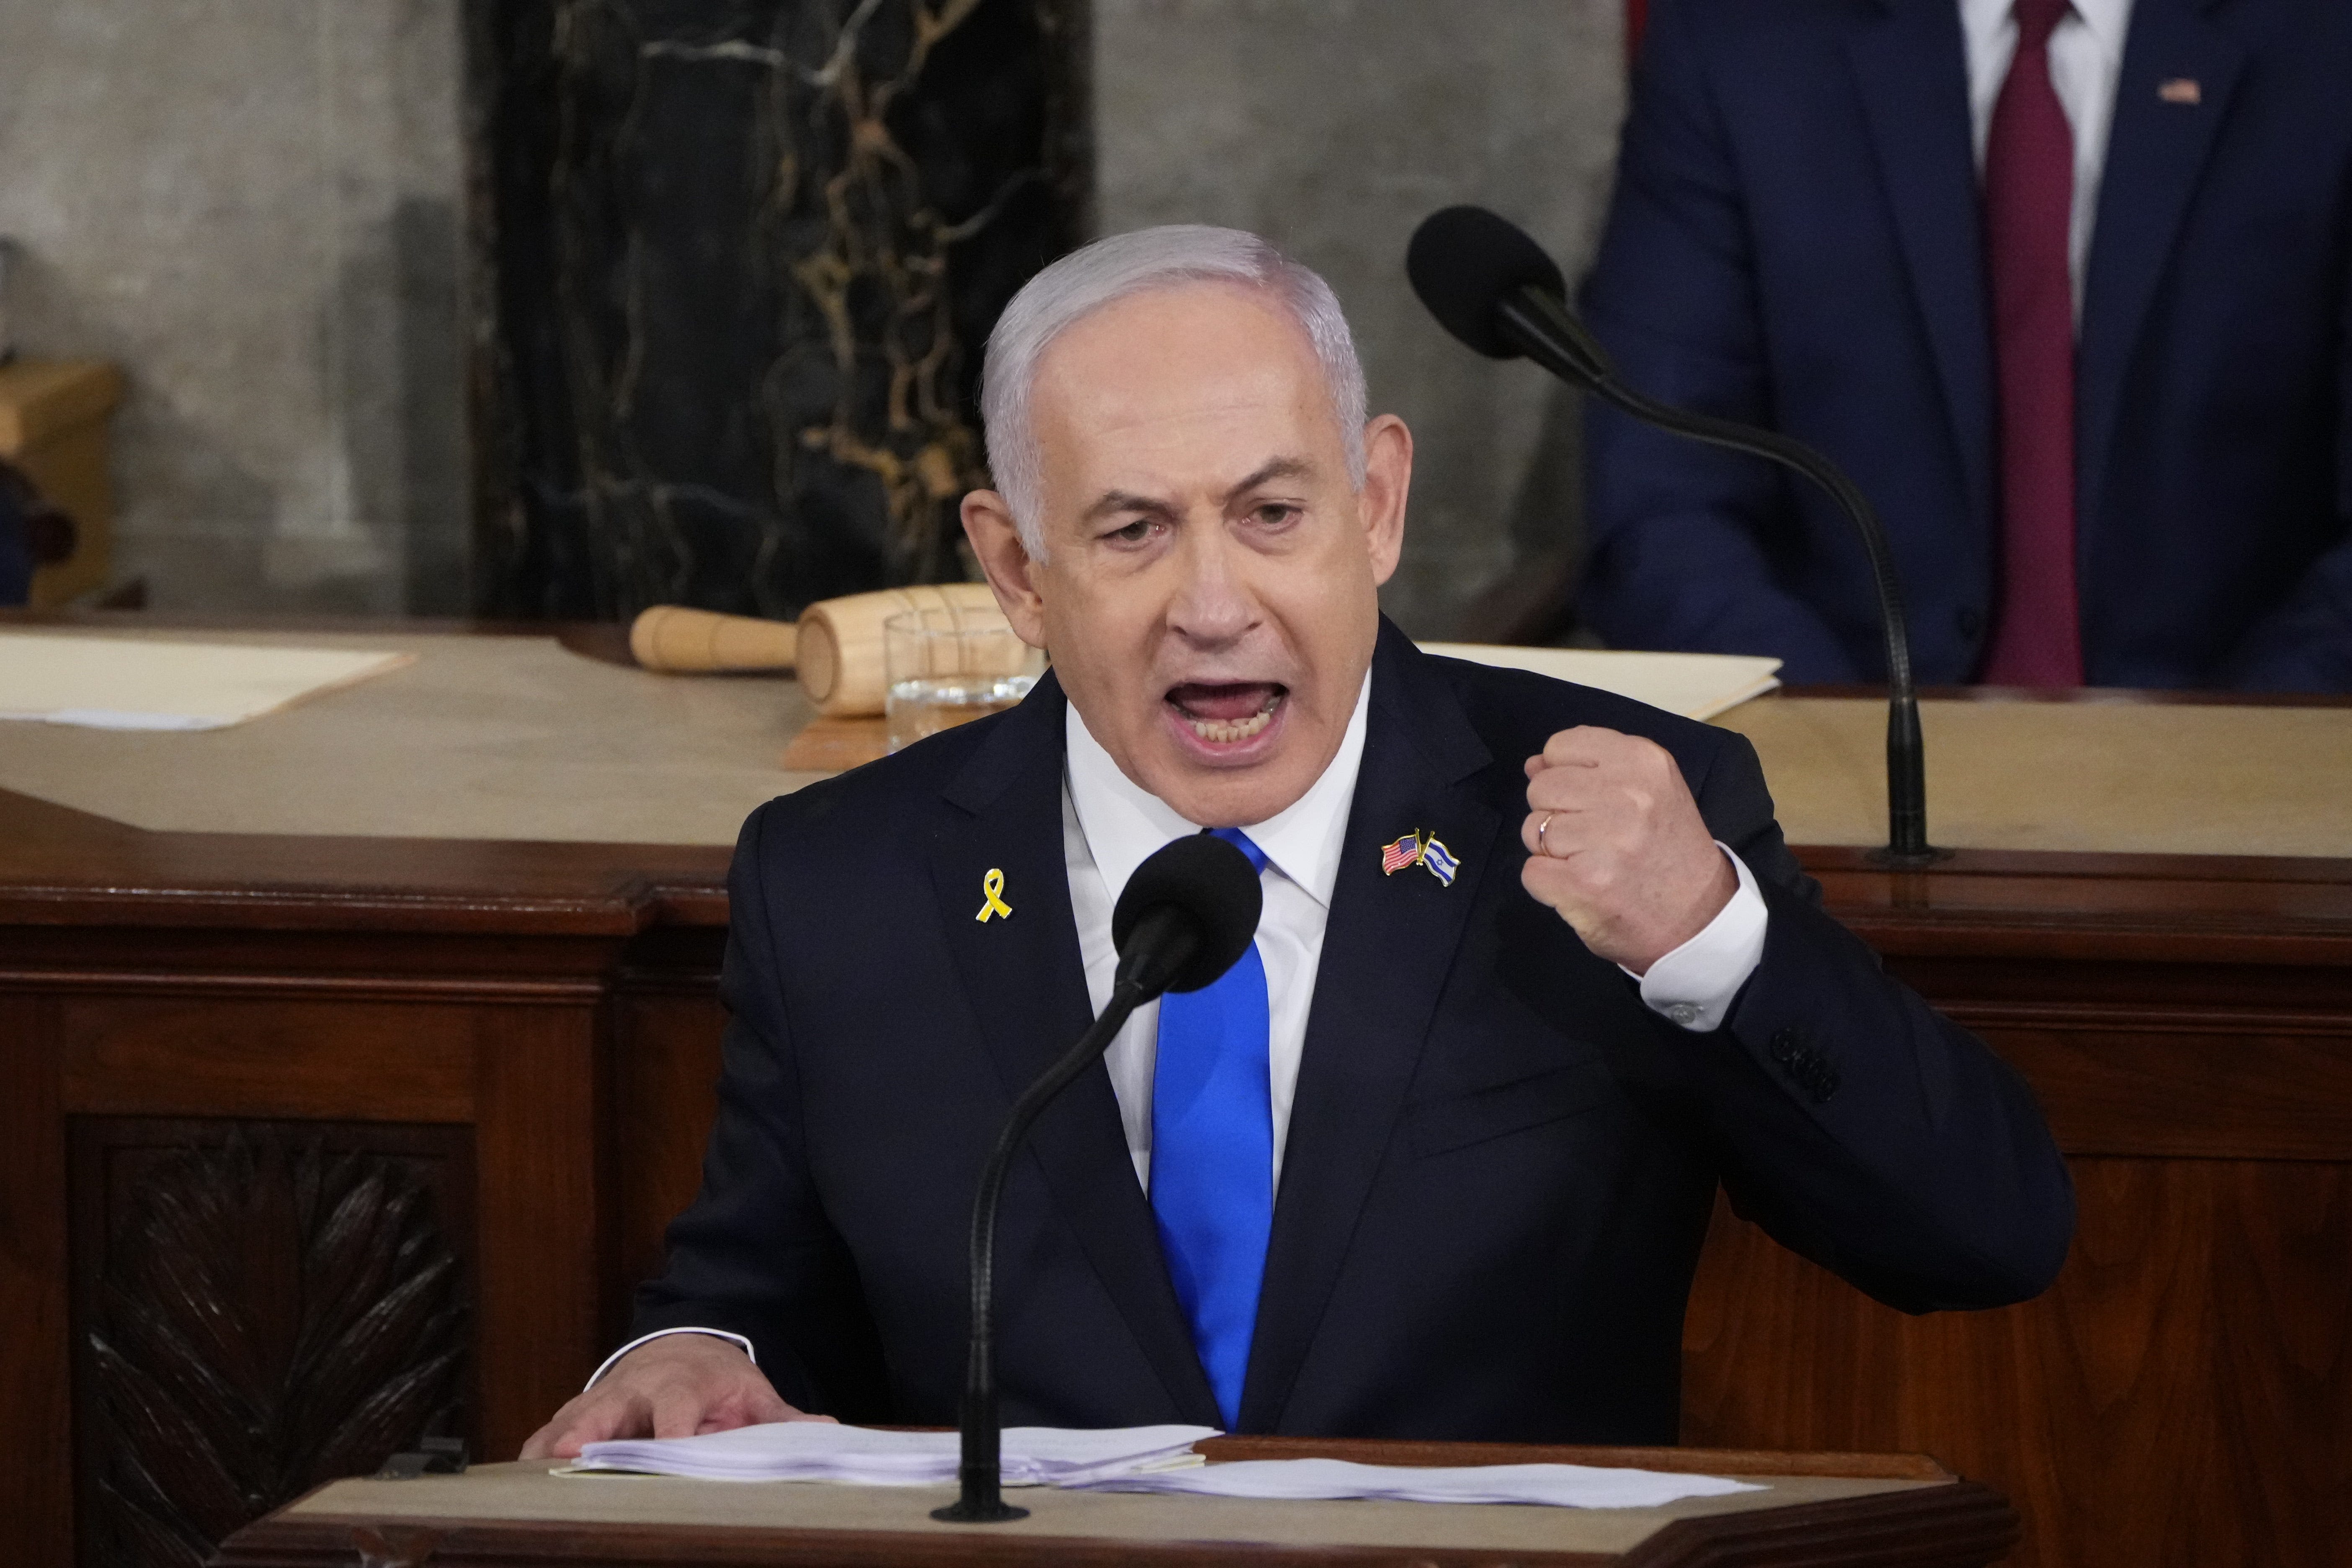 Fact-checking Israeli Prime Minister Benjamin Netanyahu's address of Congress